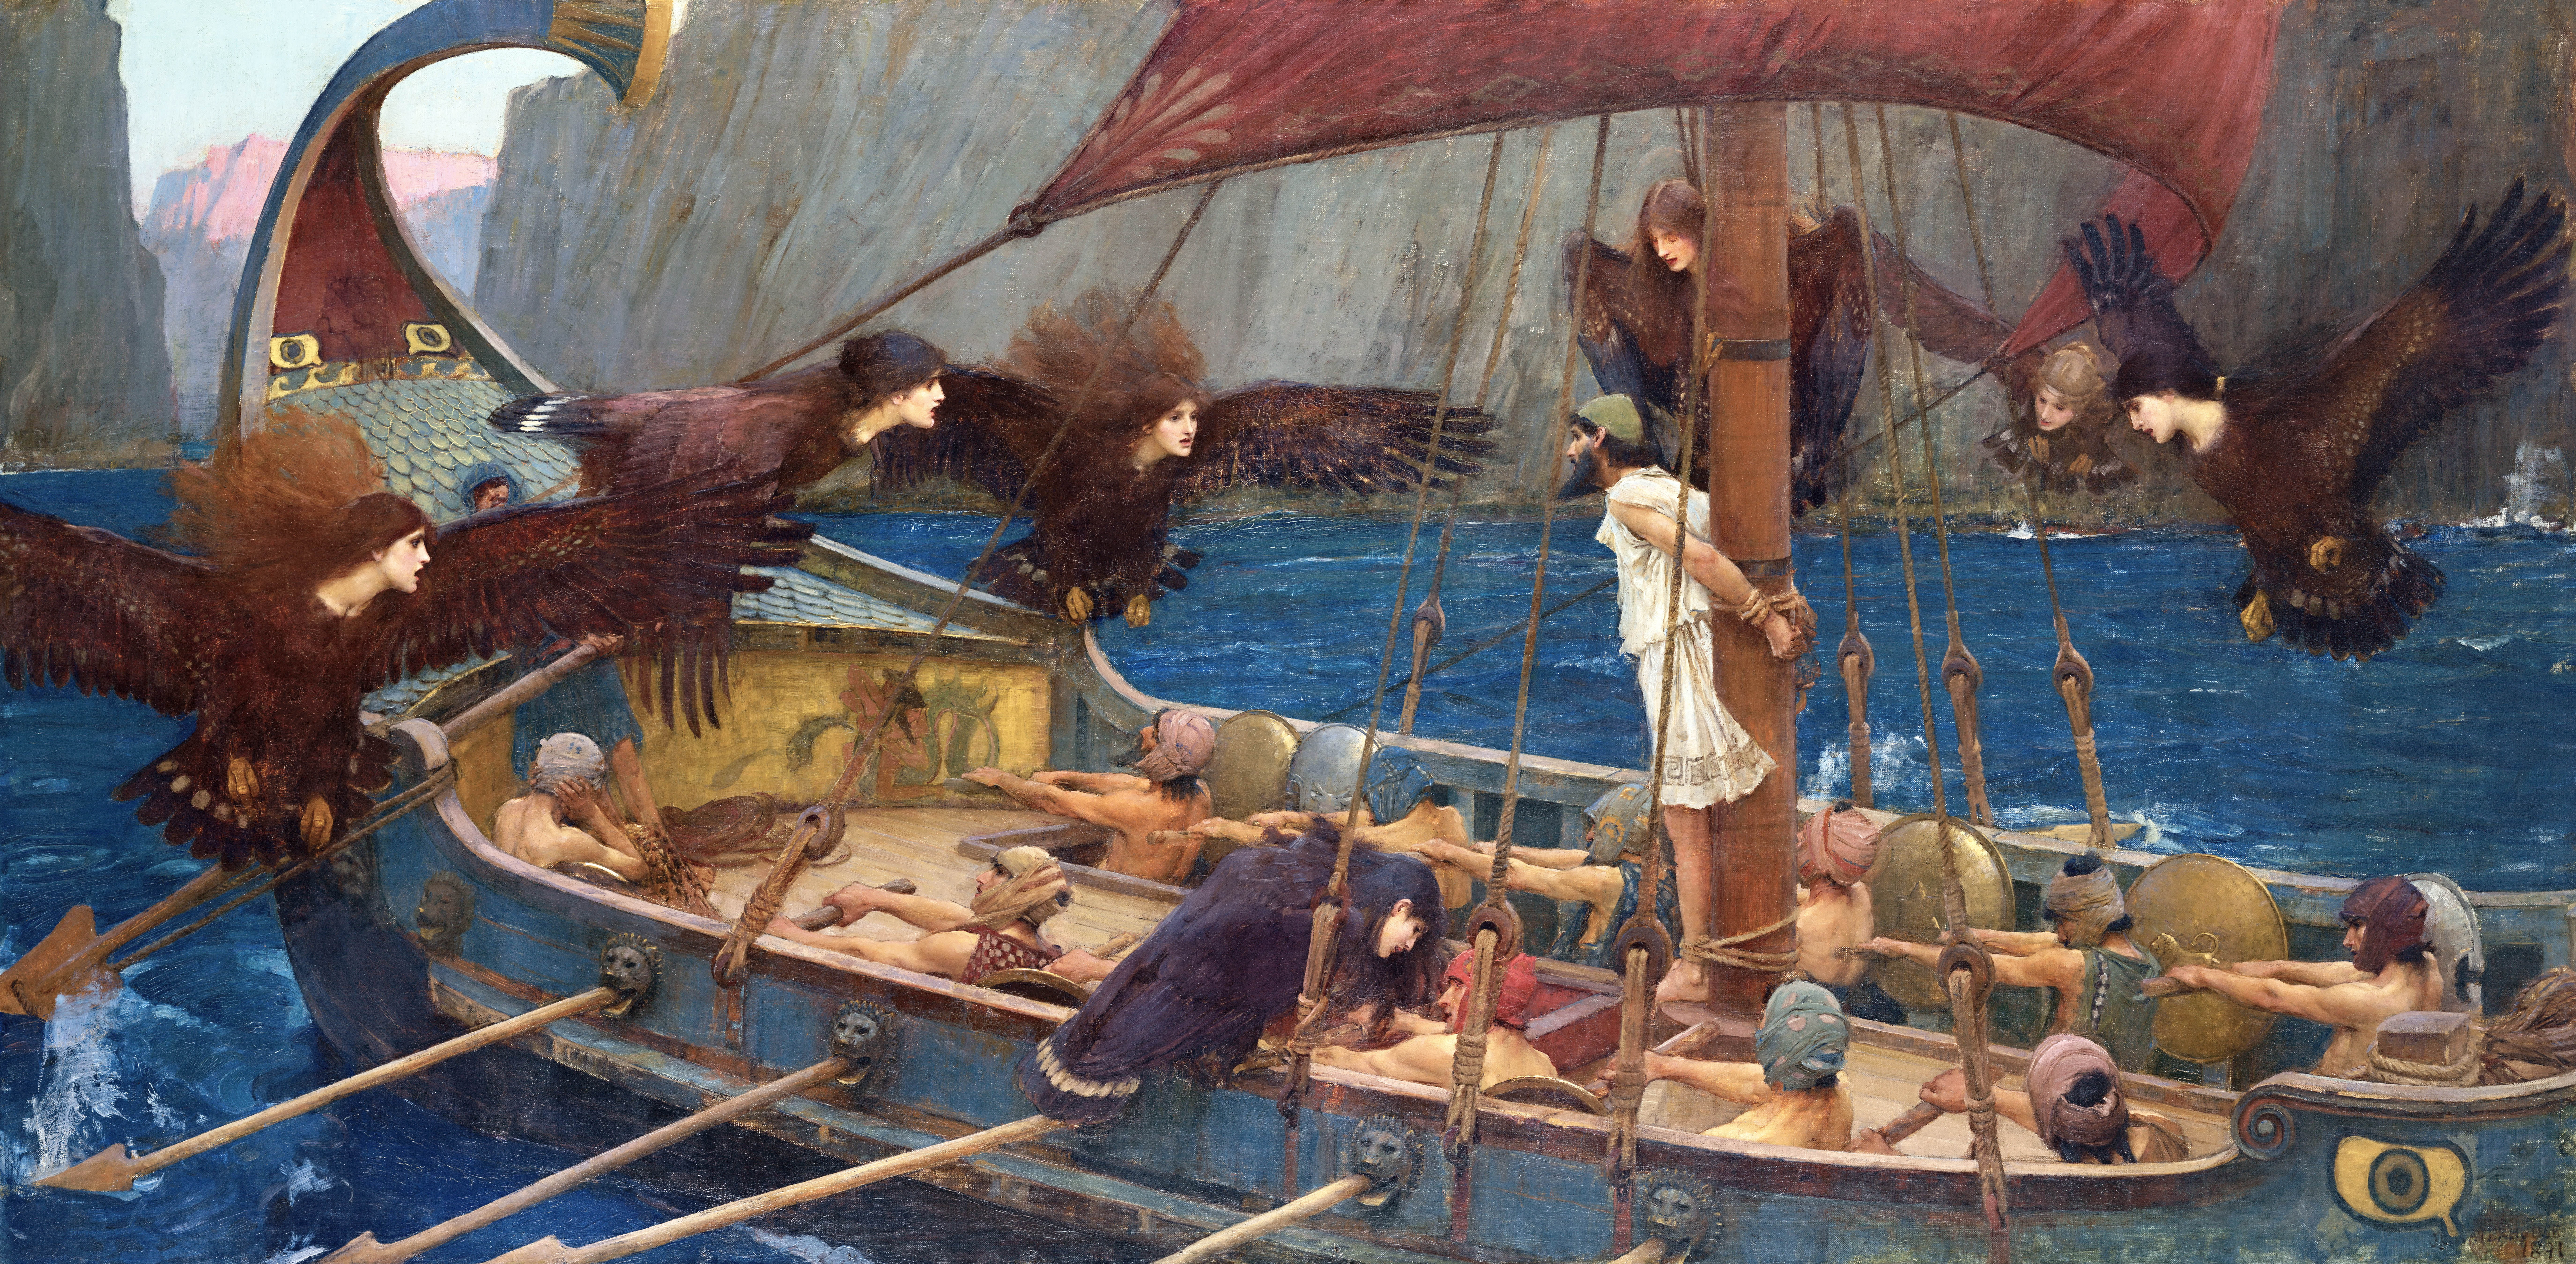 Ulysses and the Sirens, John William Waterhouse, Roman mythology